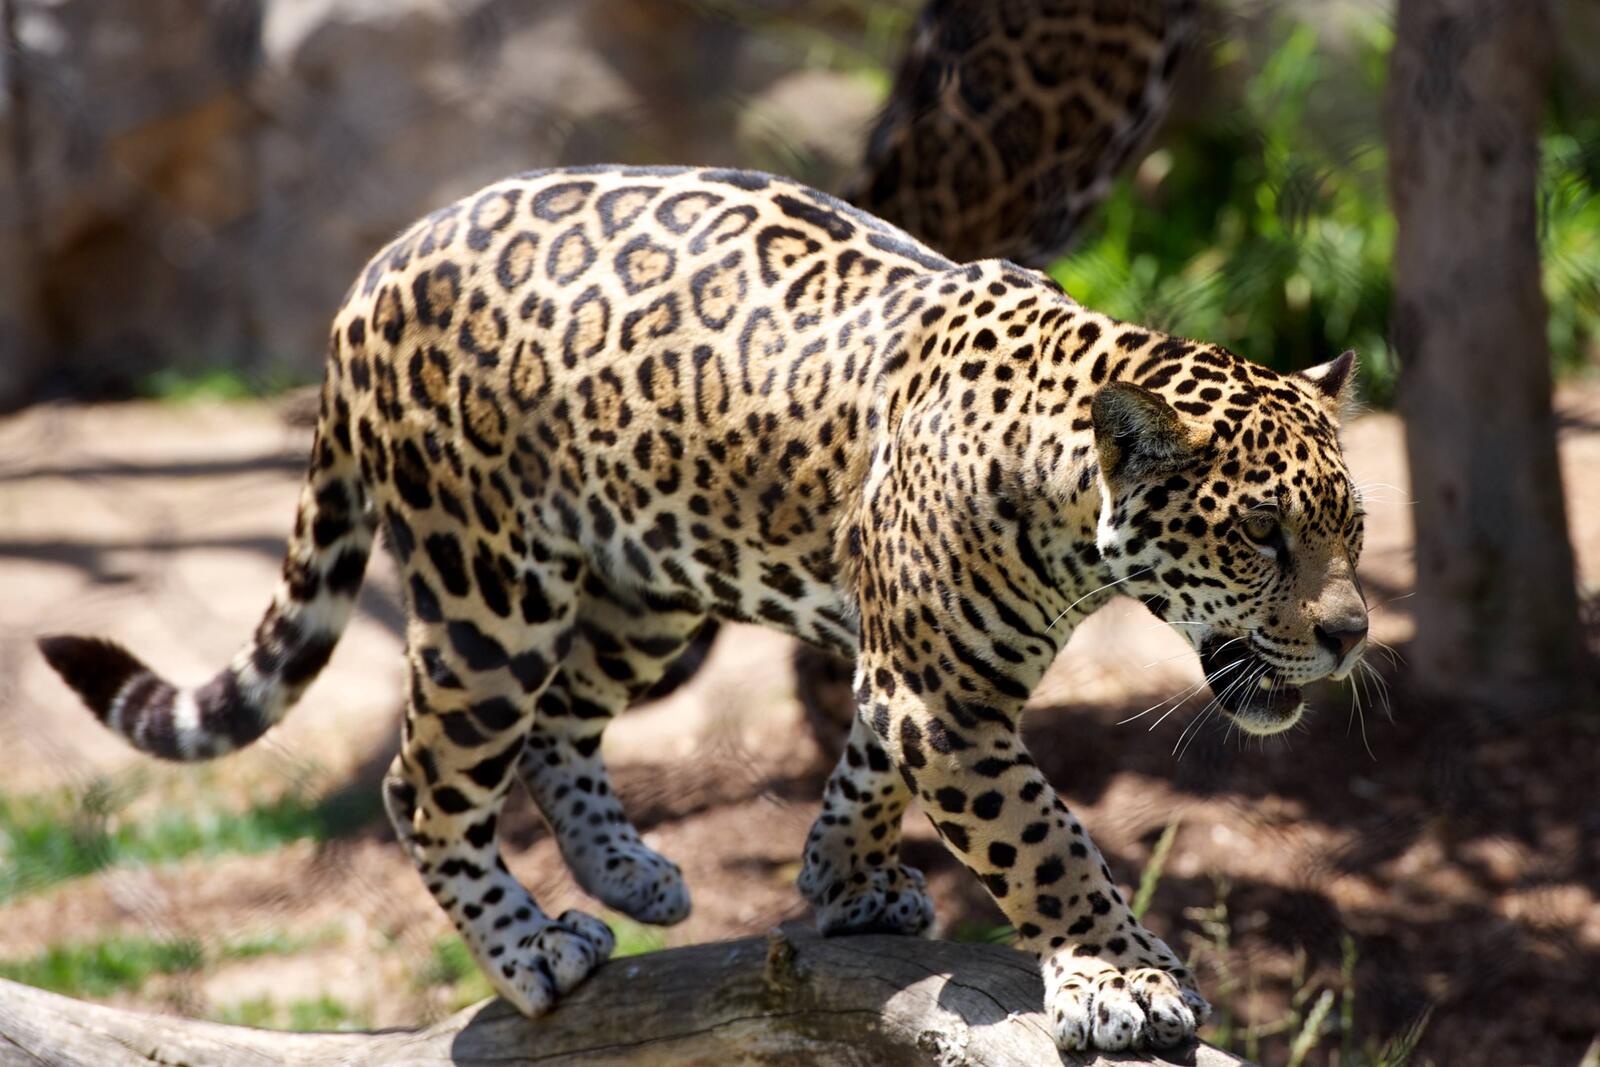 Wallpapers jump Jaguar leopard on the desktop